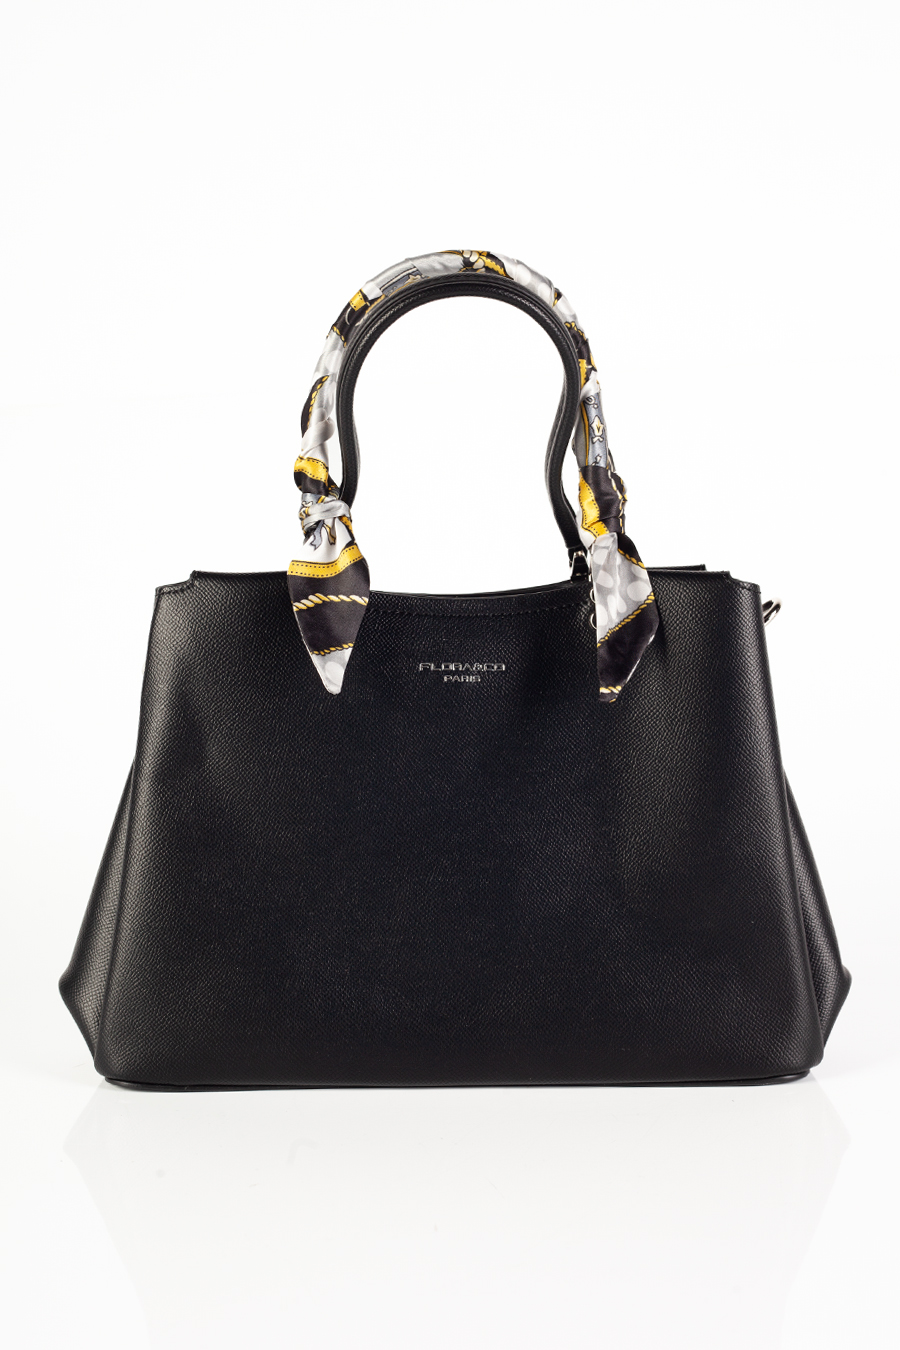 Handbag FLORA&CO H2580-NOIR